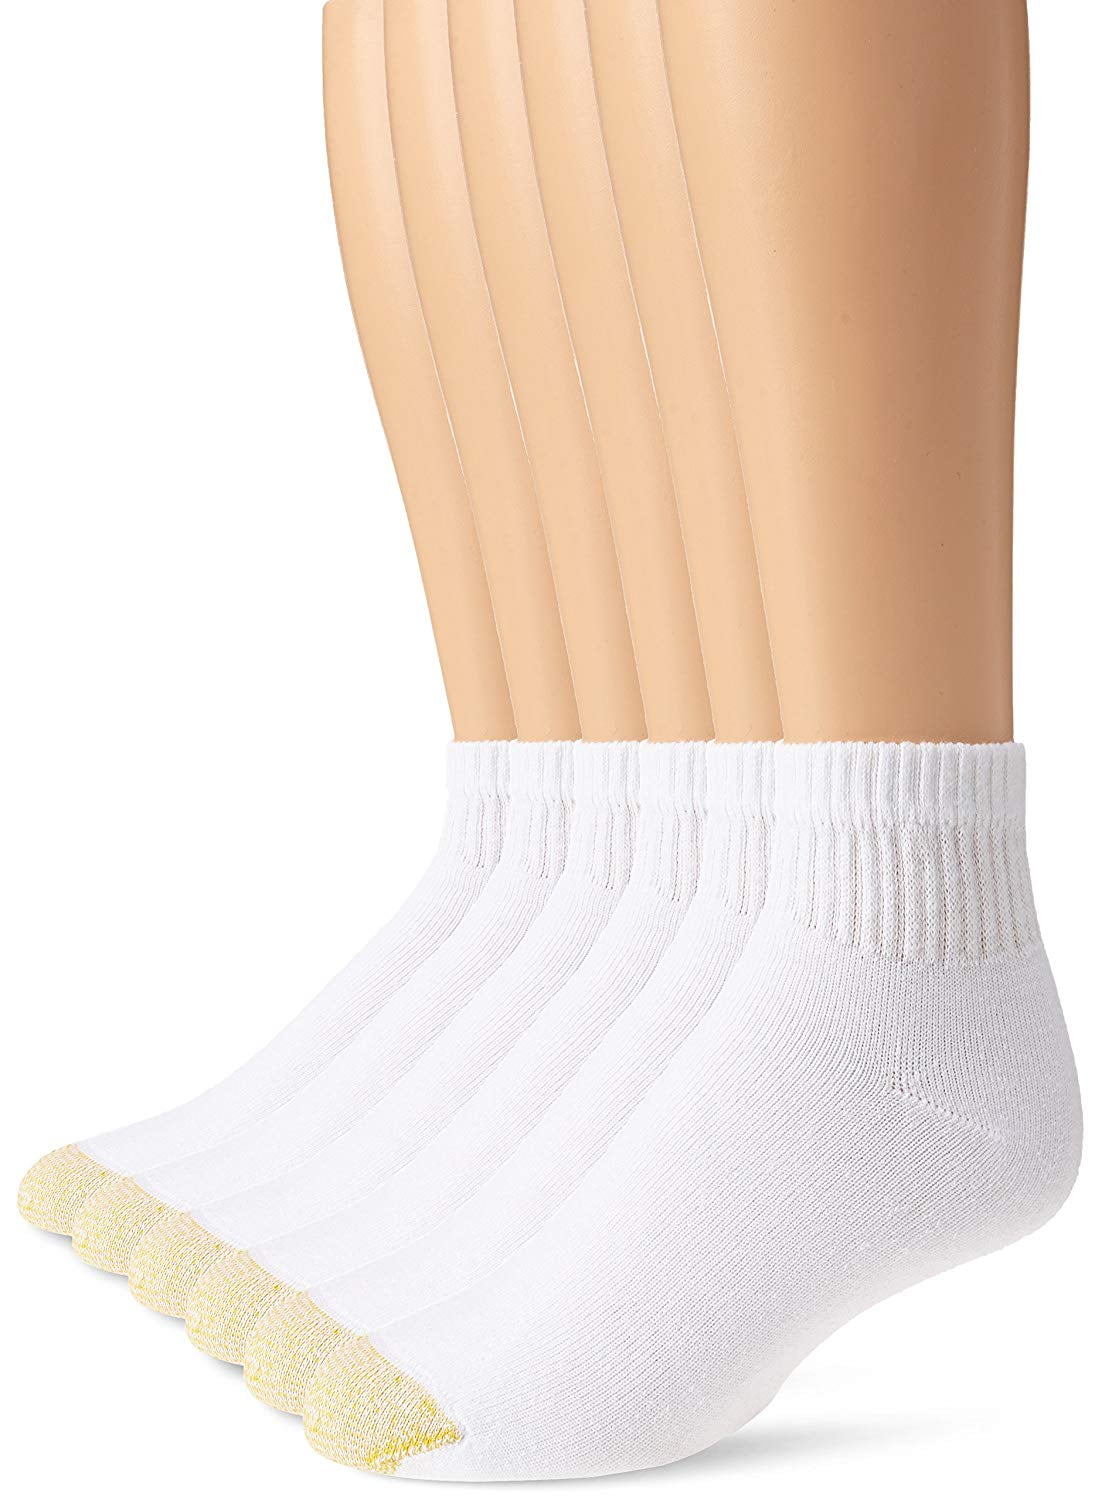 6 Pair Sock Size 10-13 Gold Toe Men's White Cotton Crew Athletic Sock 